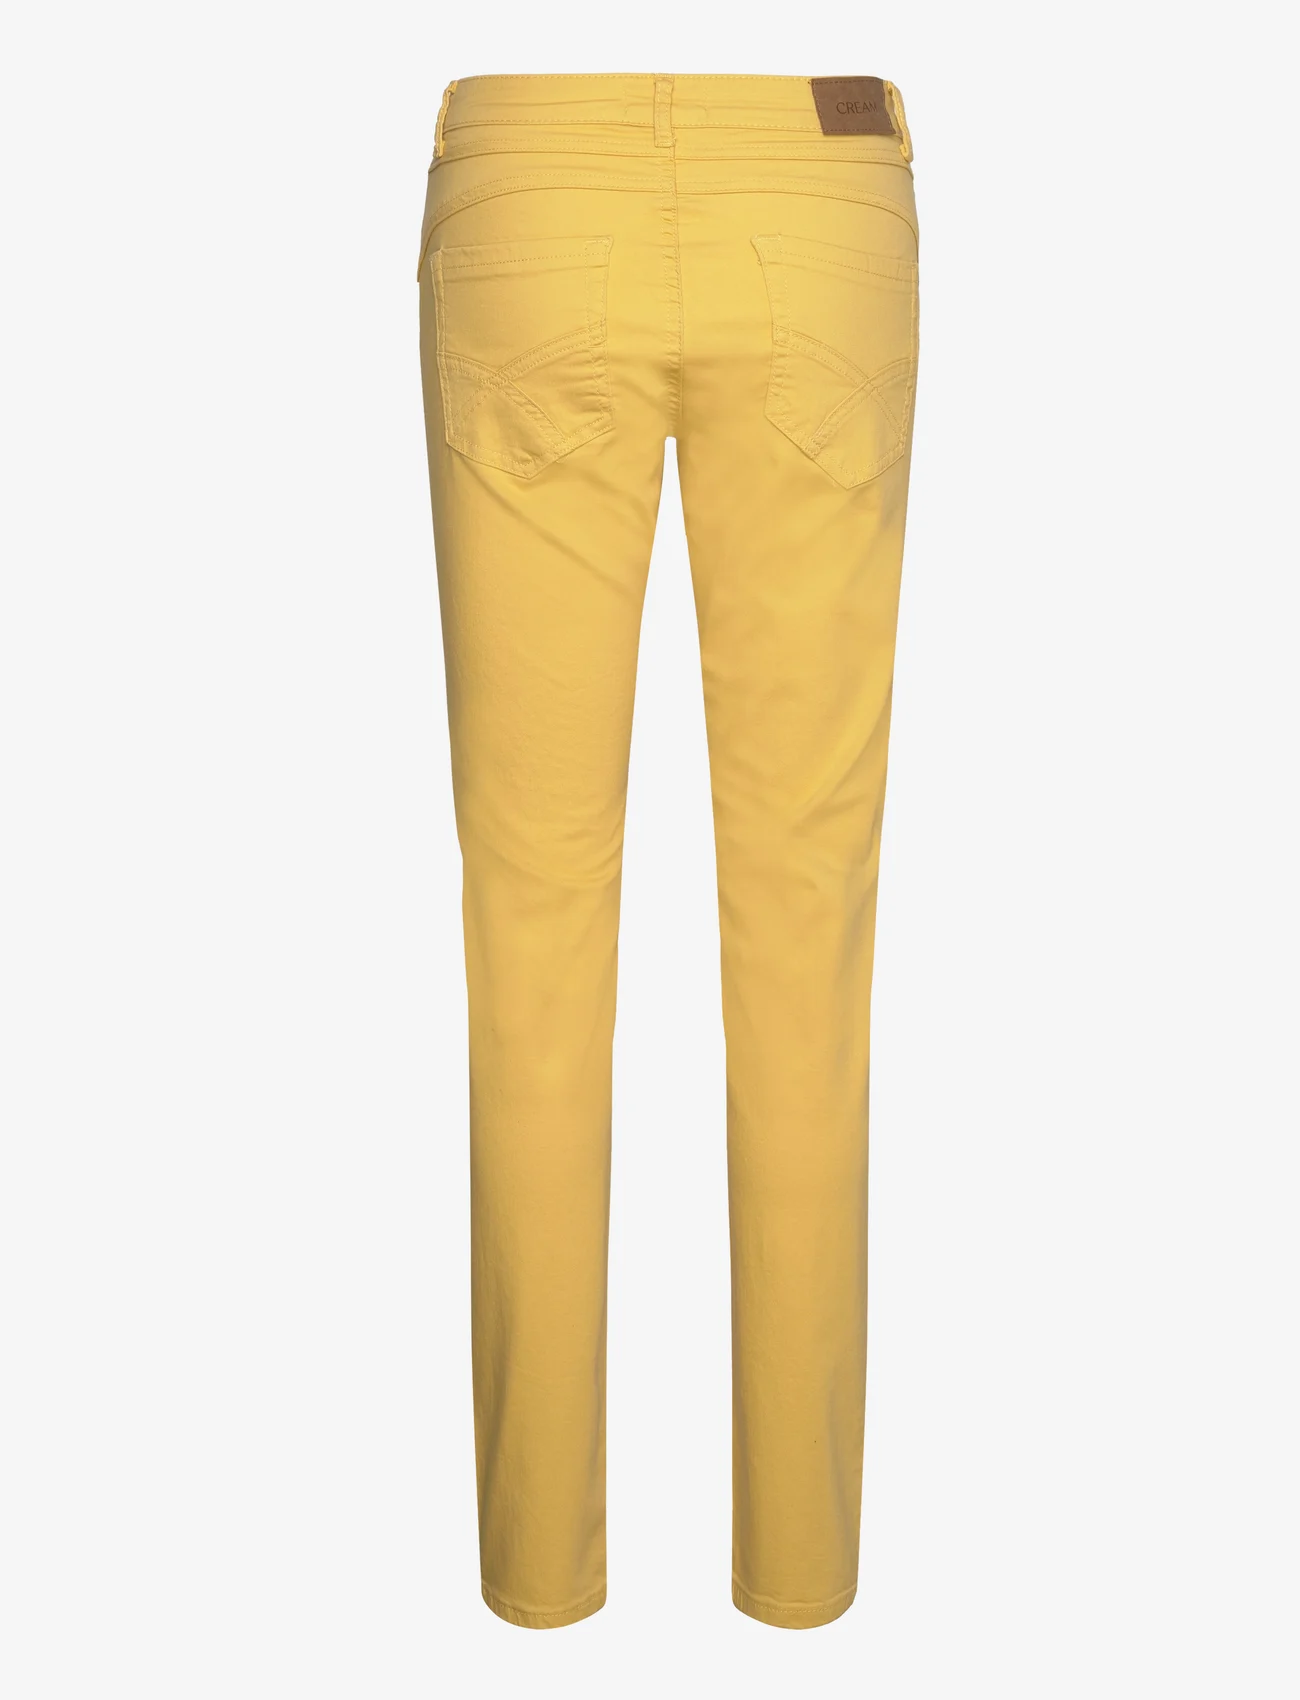 Cream - CRAnn Twill Pant - Coco Fit - raka jeans - misted yellow - 1